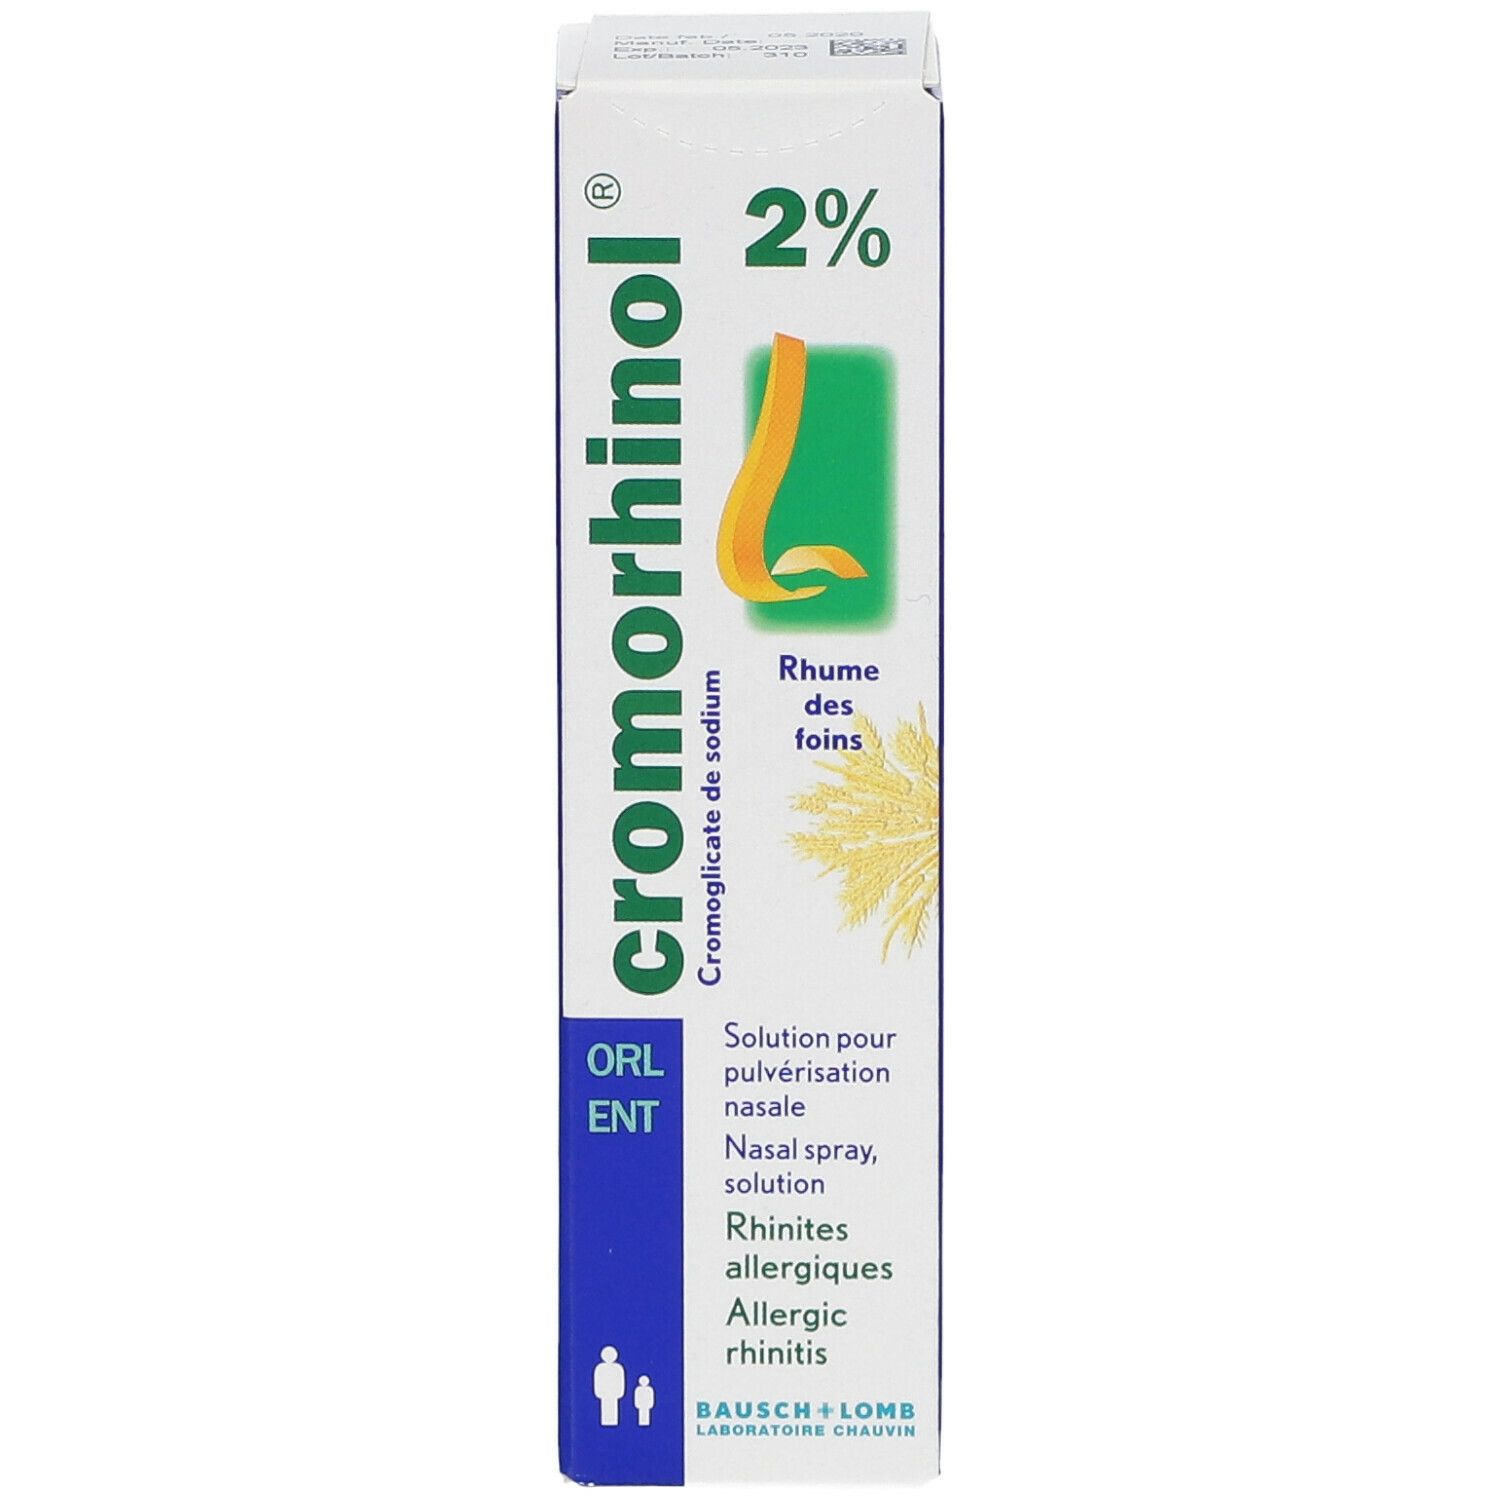 Cromorhinol® 2 %